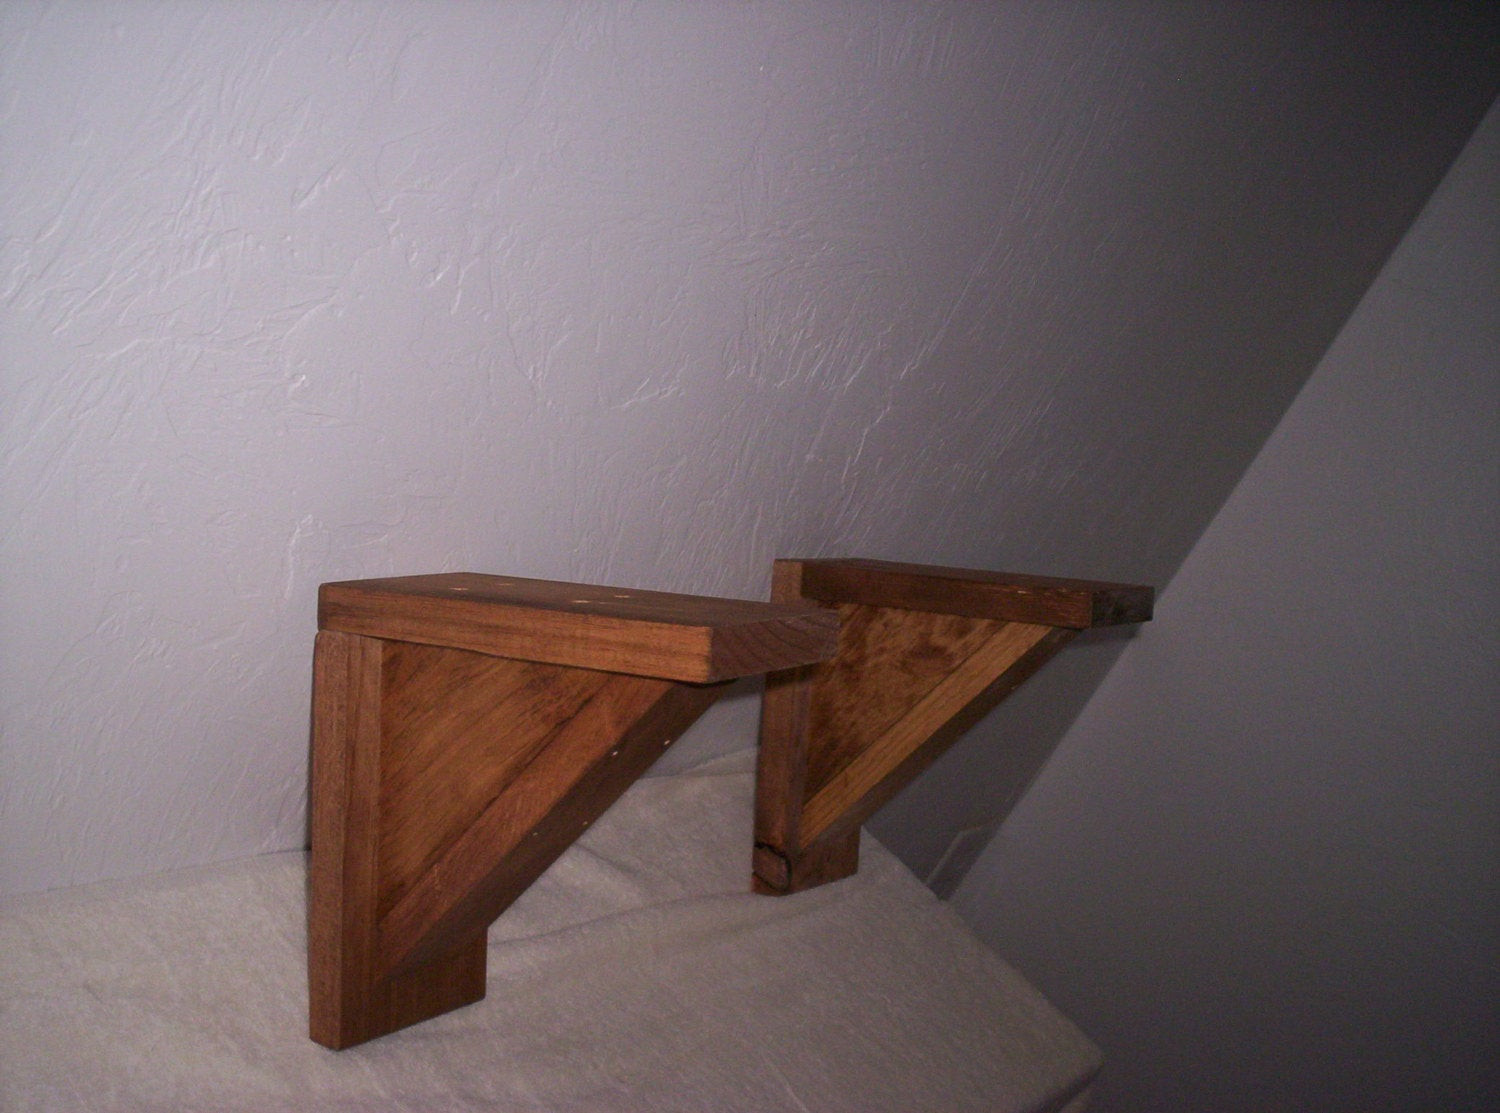 Wood Shelf Bracket DIY
 Wooden Support Brackets for DIY Shelving set of 2 brackets